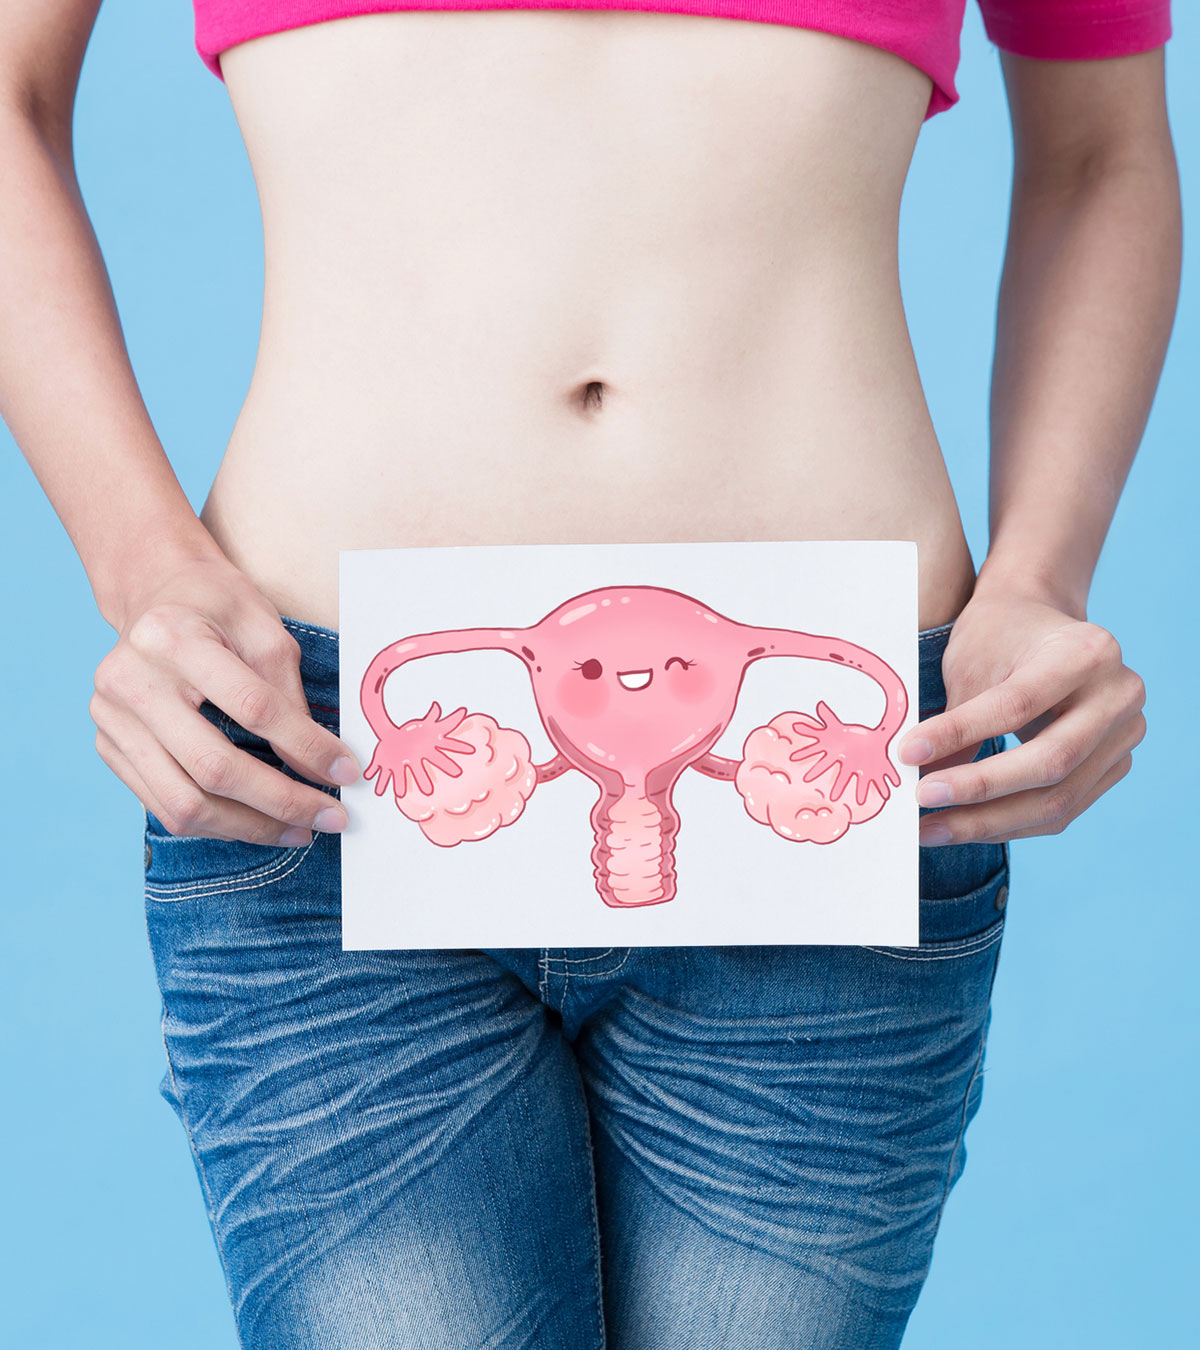 Backward Uterus - Does Tilted Uterus Affect Pregnancy?